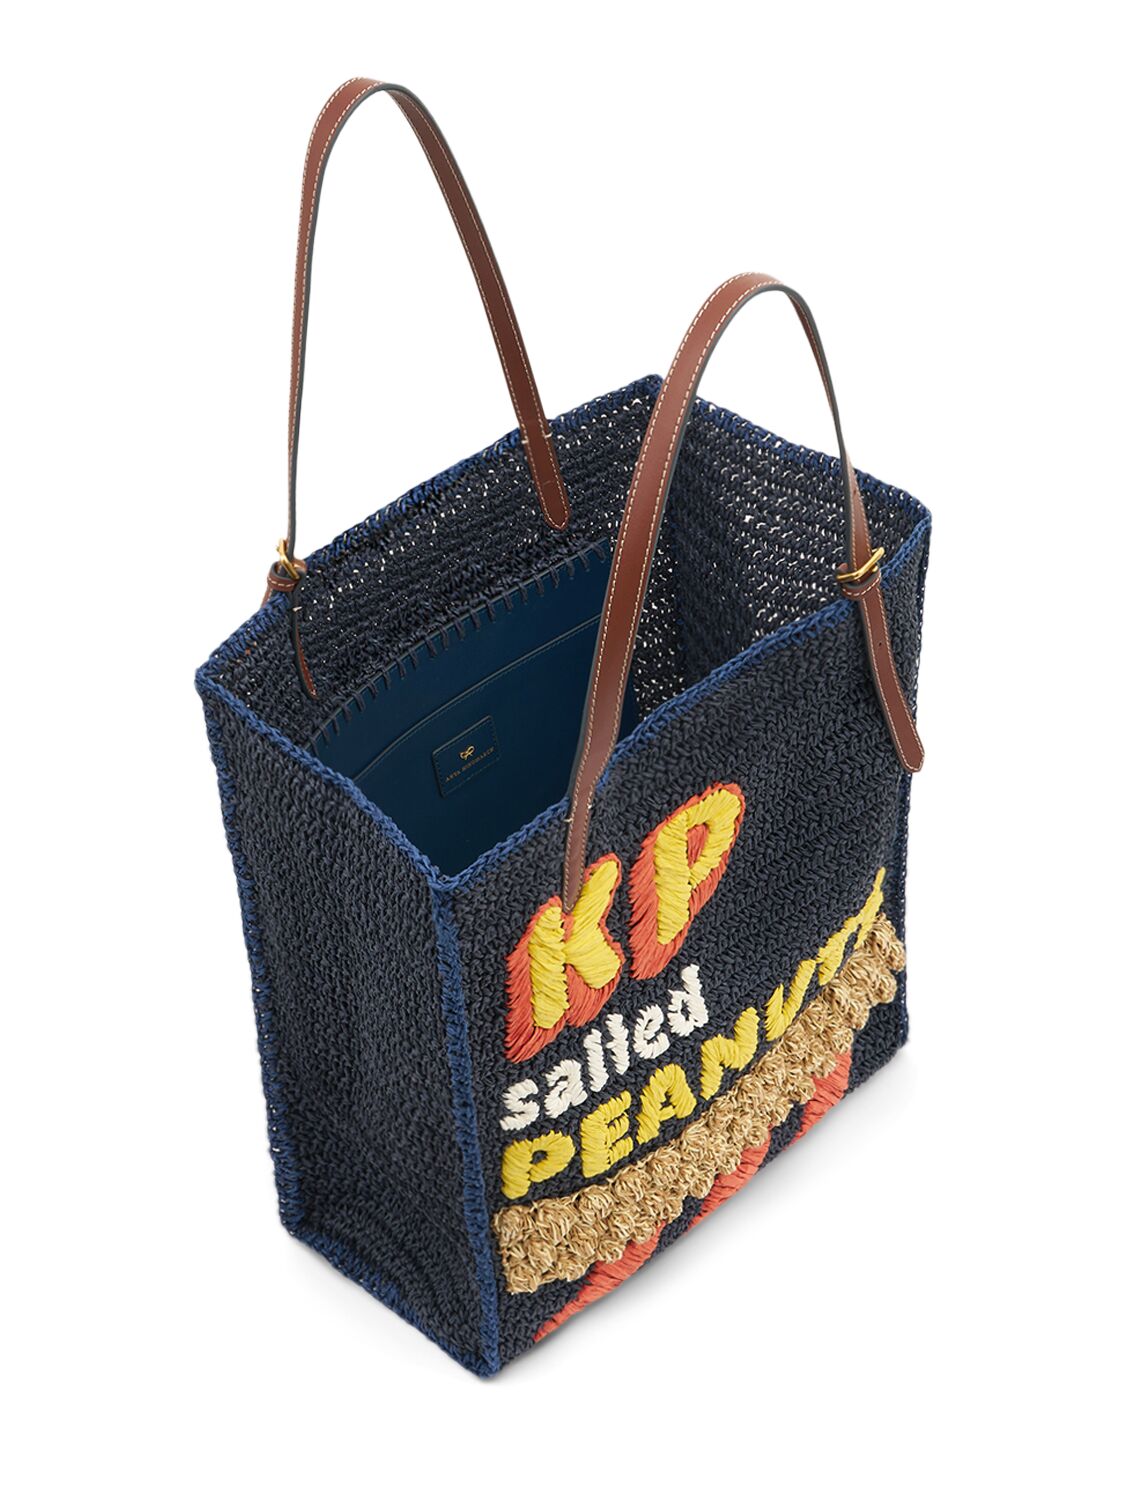 Shop Anya Hindmarch Kp Peanuts Raffia Tote Bag In Dark Petrol